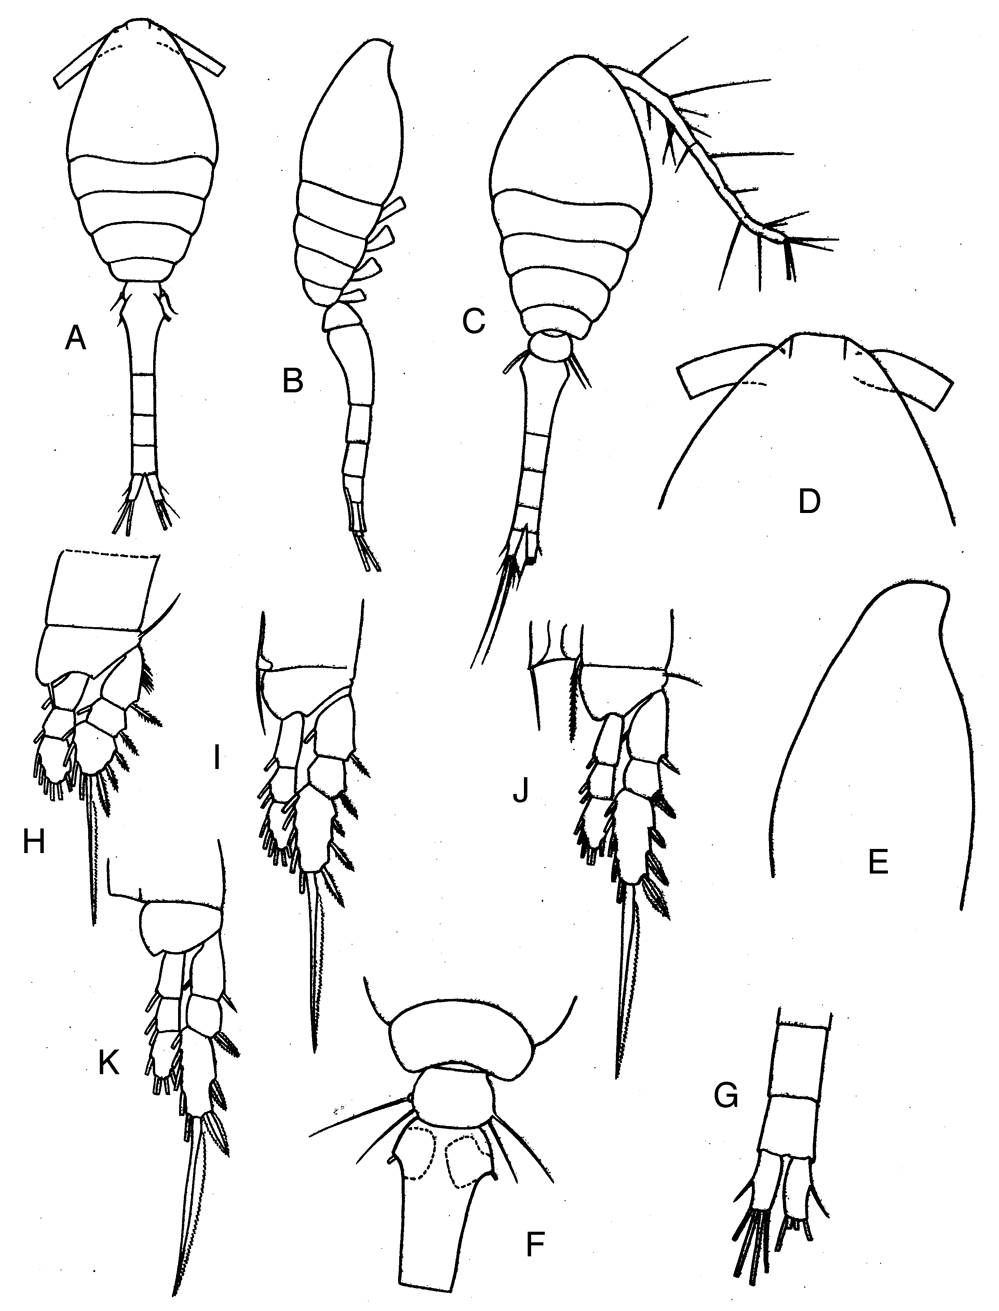 Espce Oithona nana - Planche 15 de figures morphologiques